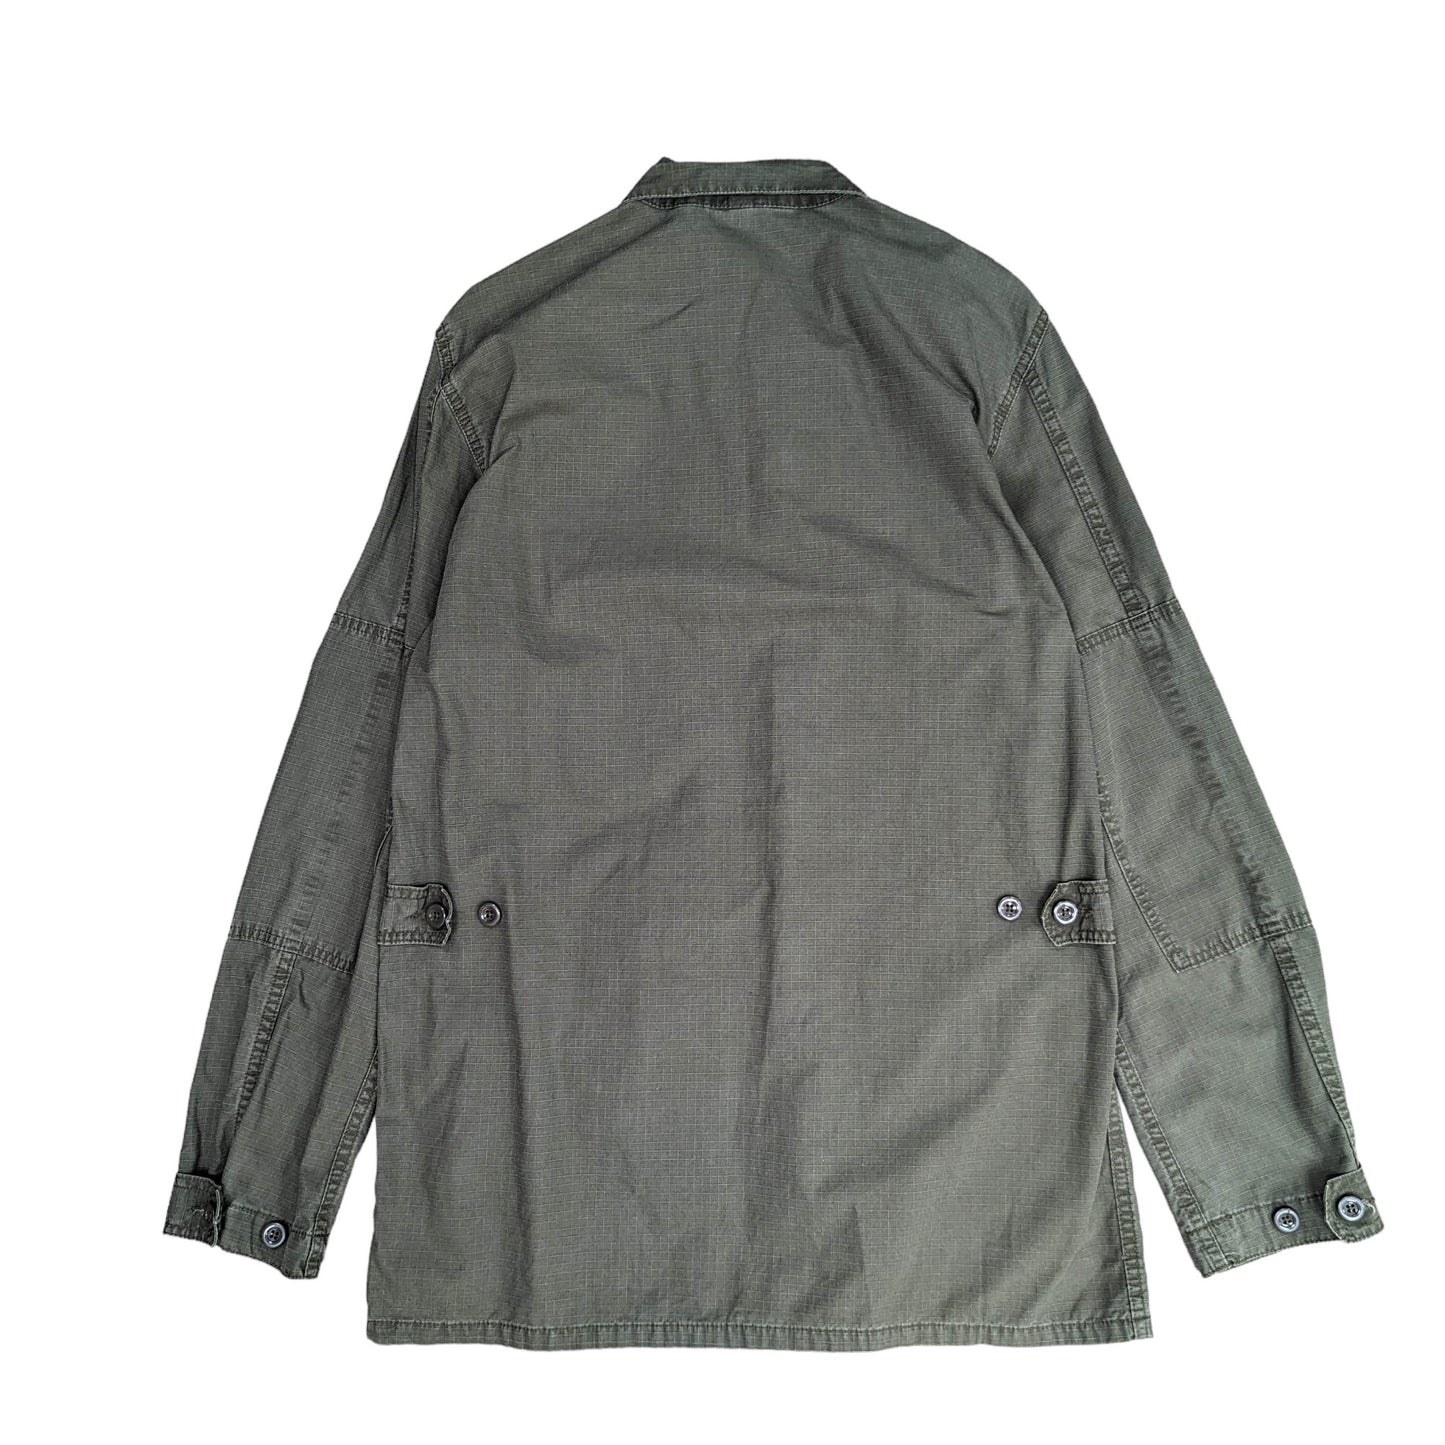 Carhartt Force Jacket Size L